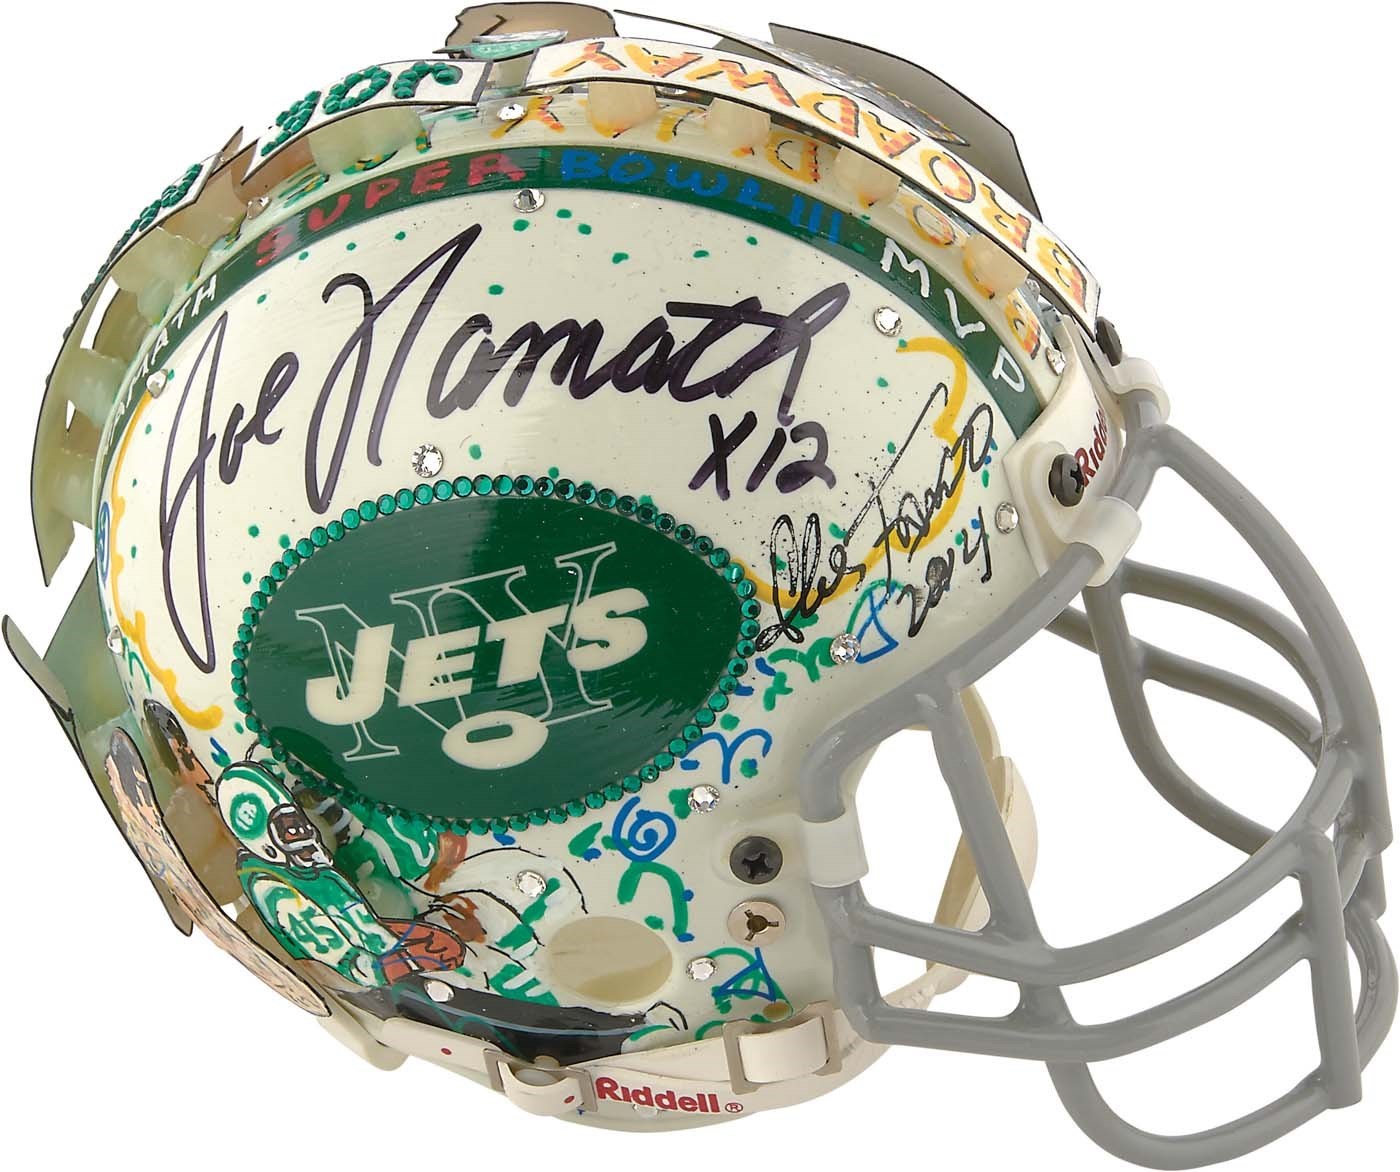 - Wonderful 2014 Joe Namath Signed Mini Helmet by Charles Fazzino